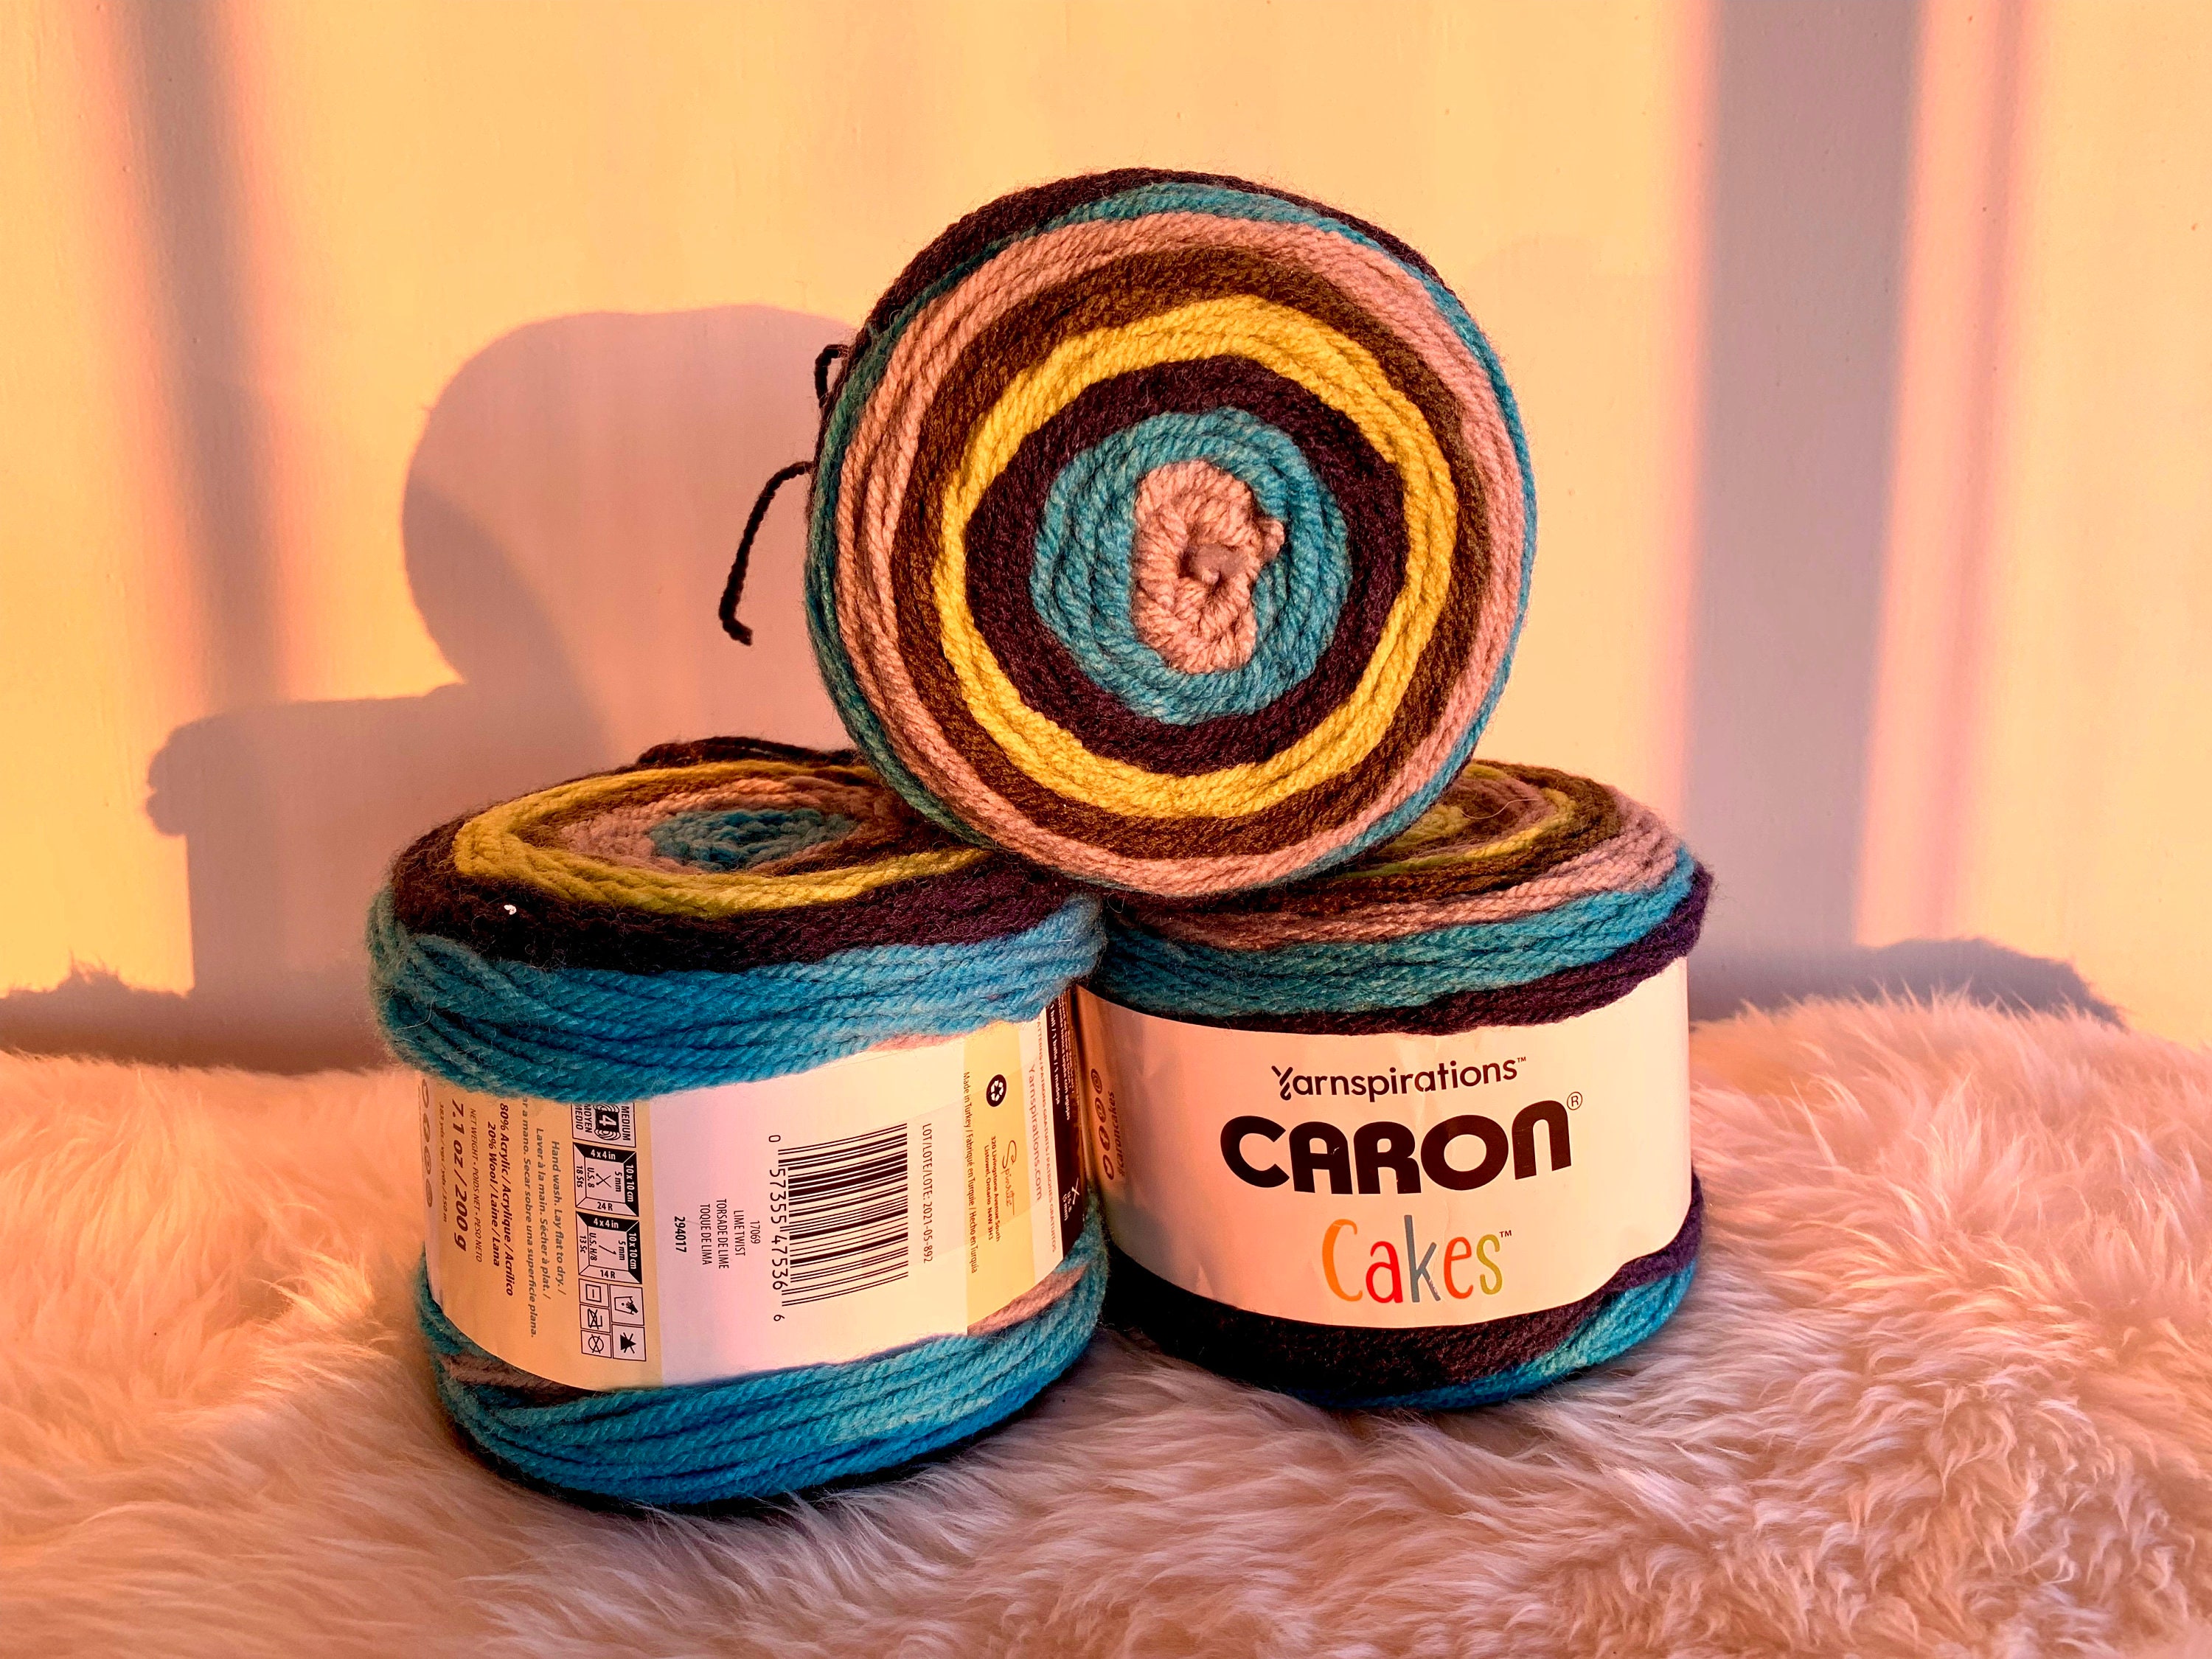 Caron® Anniversary Cakes™ Yarn